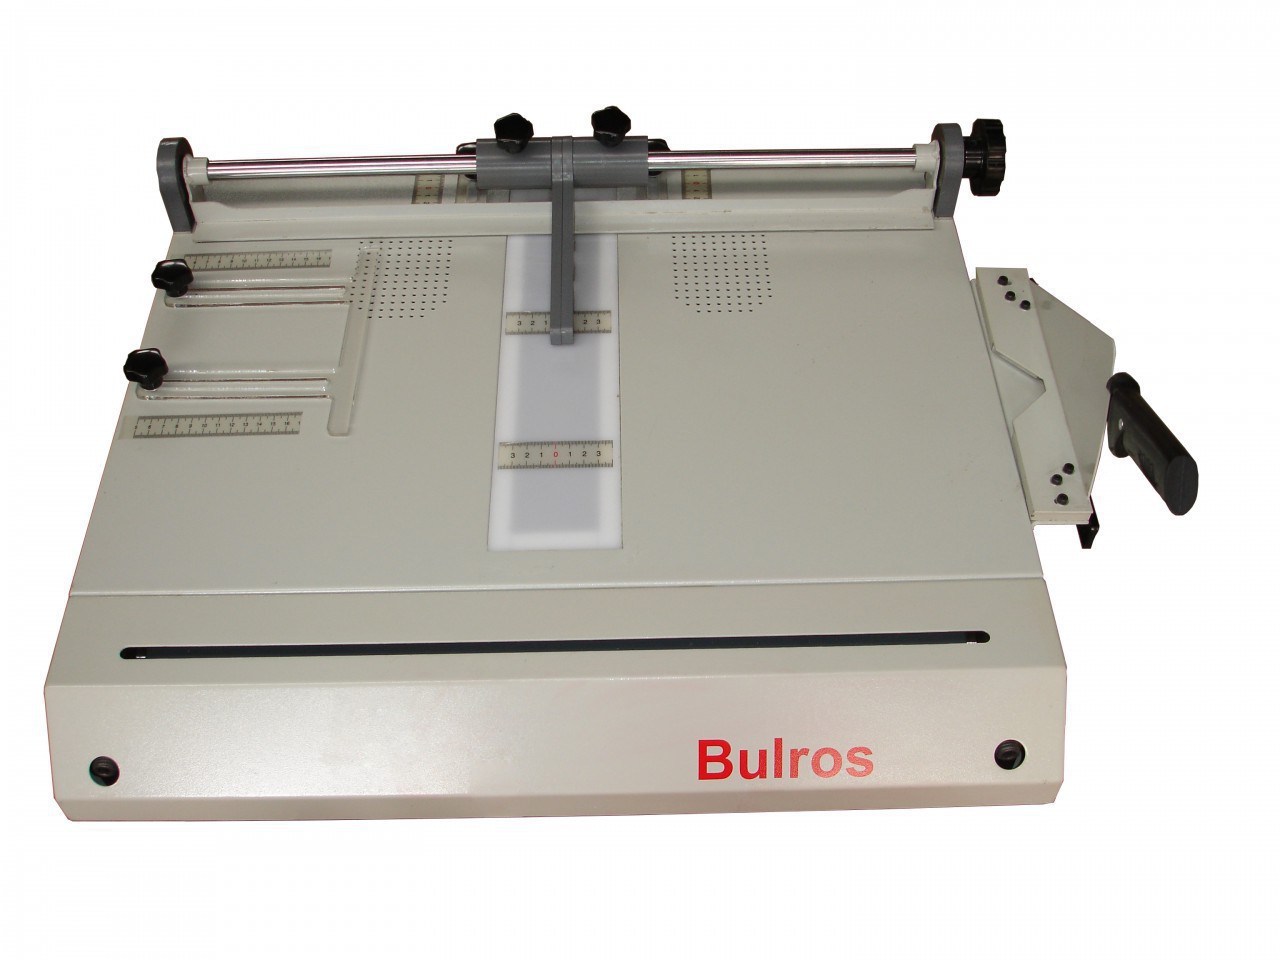 Крышкоделательный аппарат Bulros professional series 100K, А3 - 138069 руб.